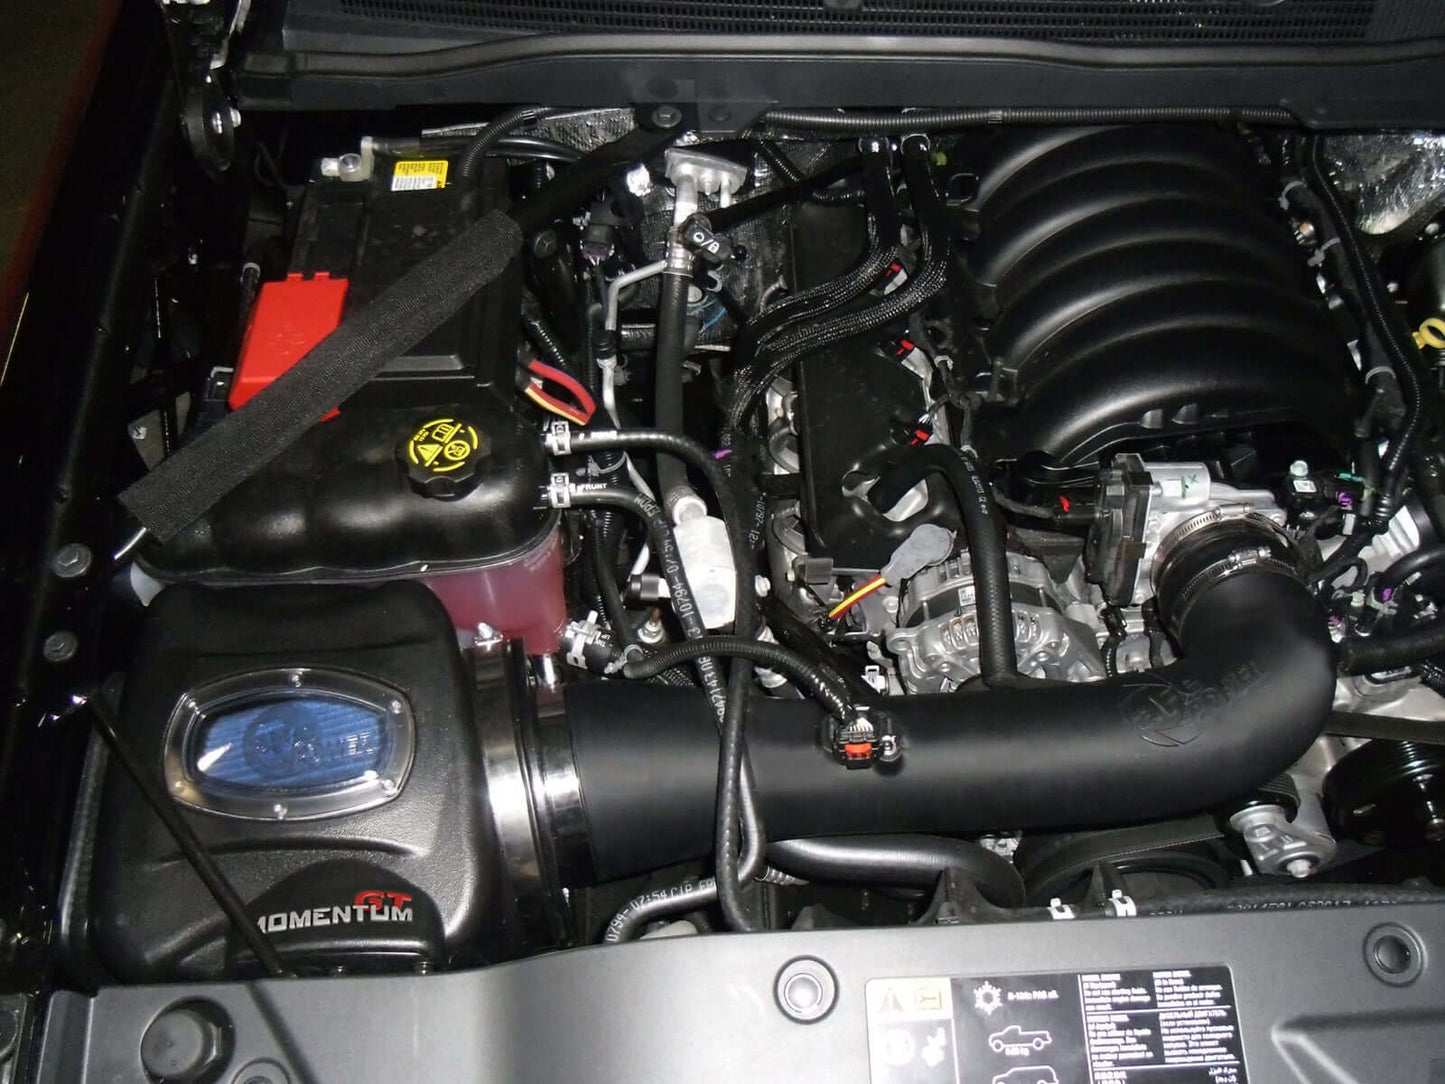 54-74104 - AFE Momentum GT Pro 5R - Black Bear Performance